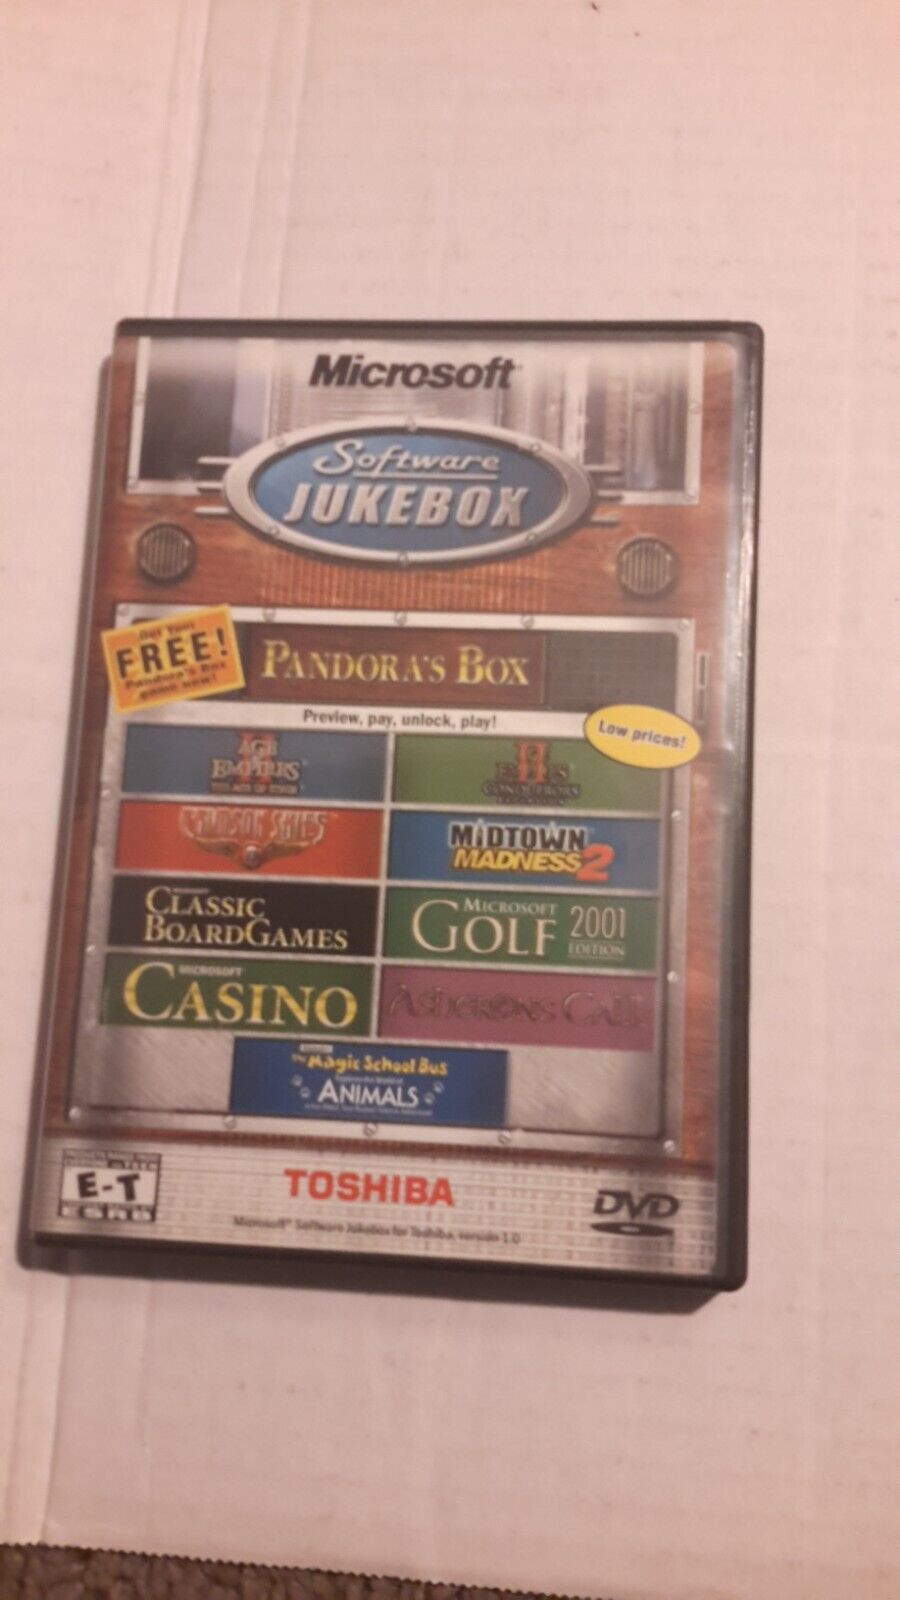 Microsoft Software Jukebox for Toshiba Version 1.0 PC Plus More 2002 